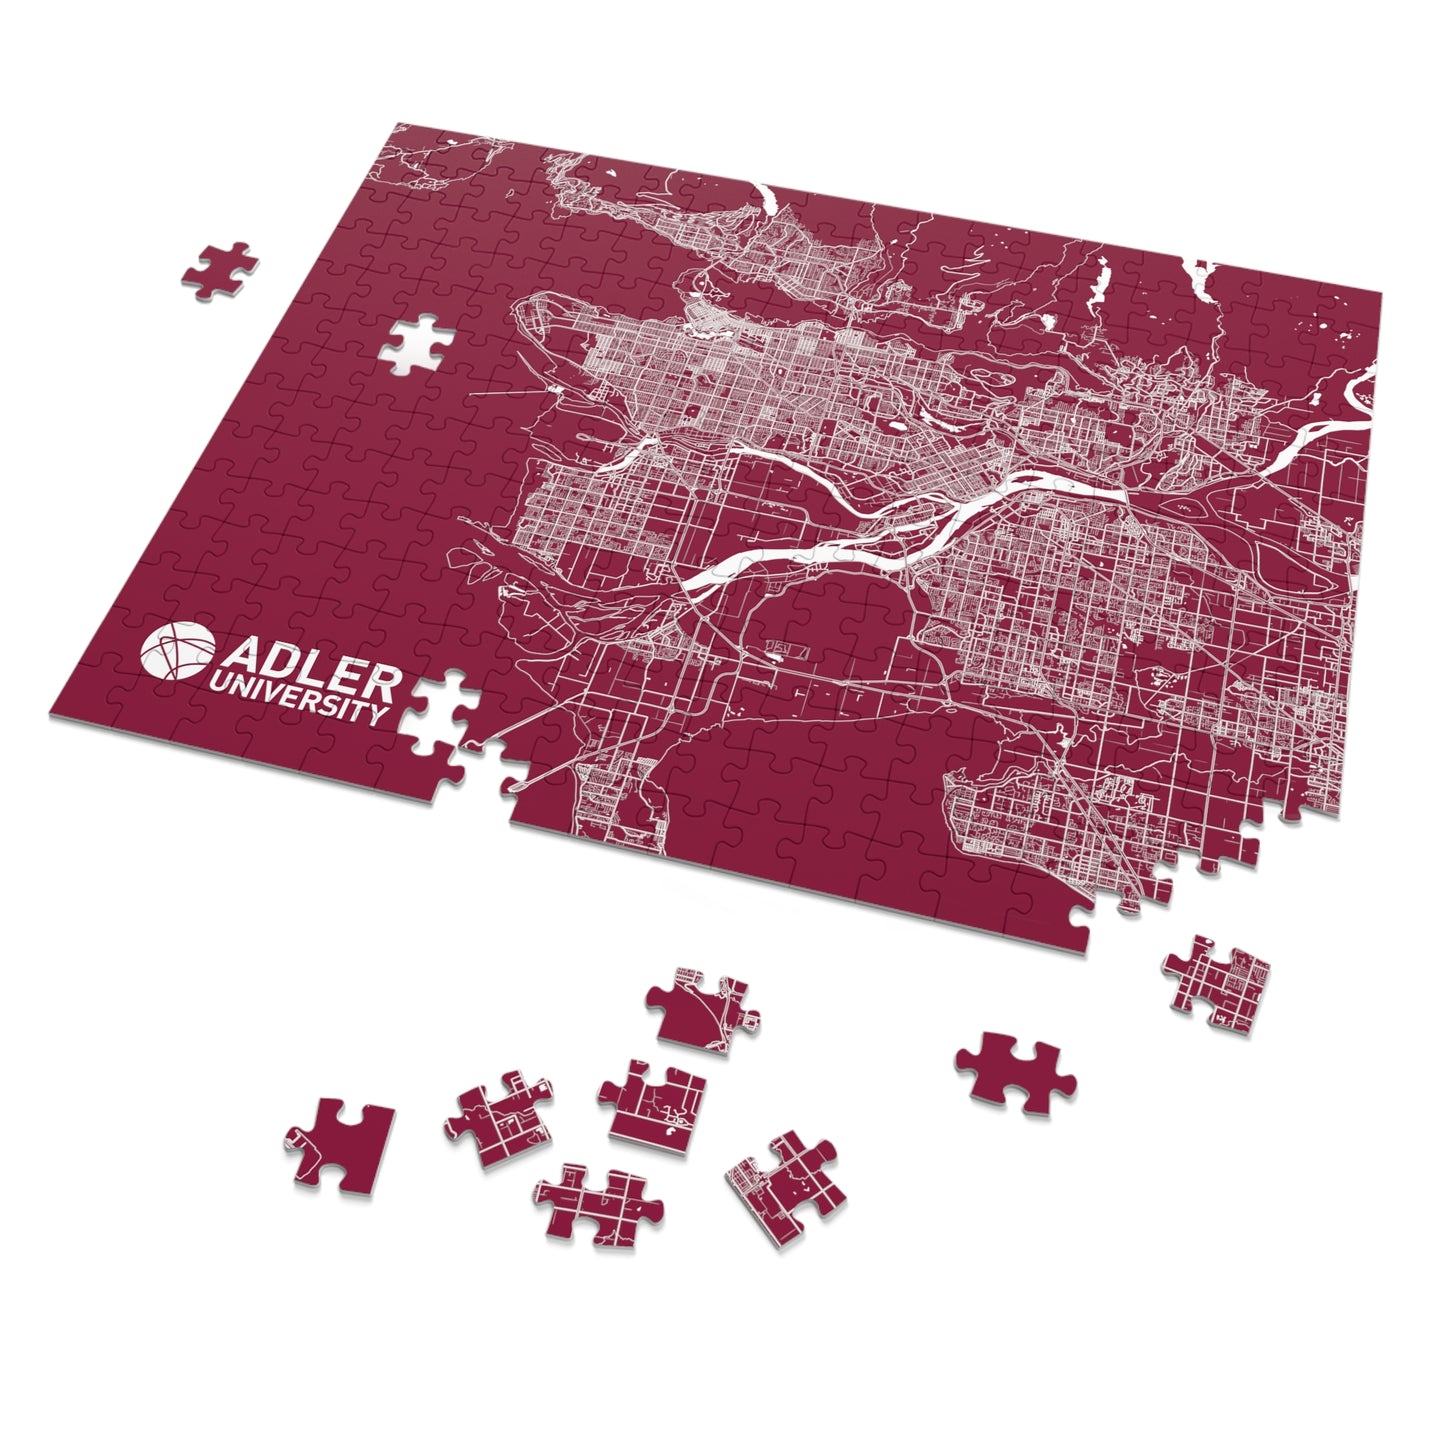 Adler University Vancouver Jigsaw Puzzle